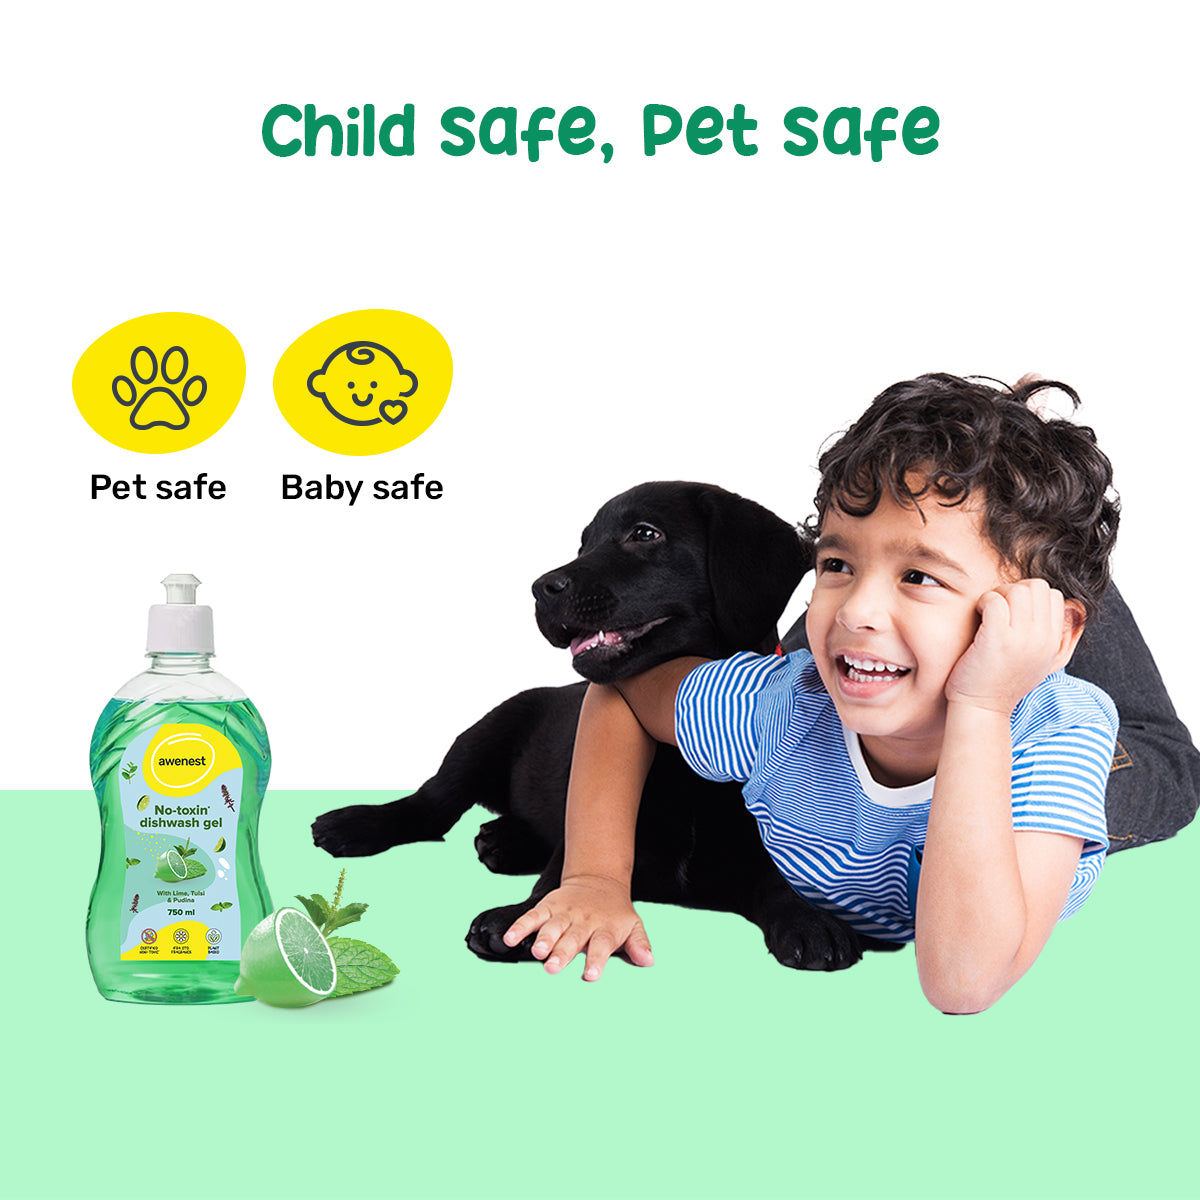 Organic, No-toxin Pet-friendly, Child-safe Dishwash Gel